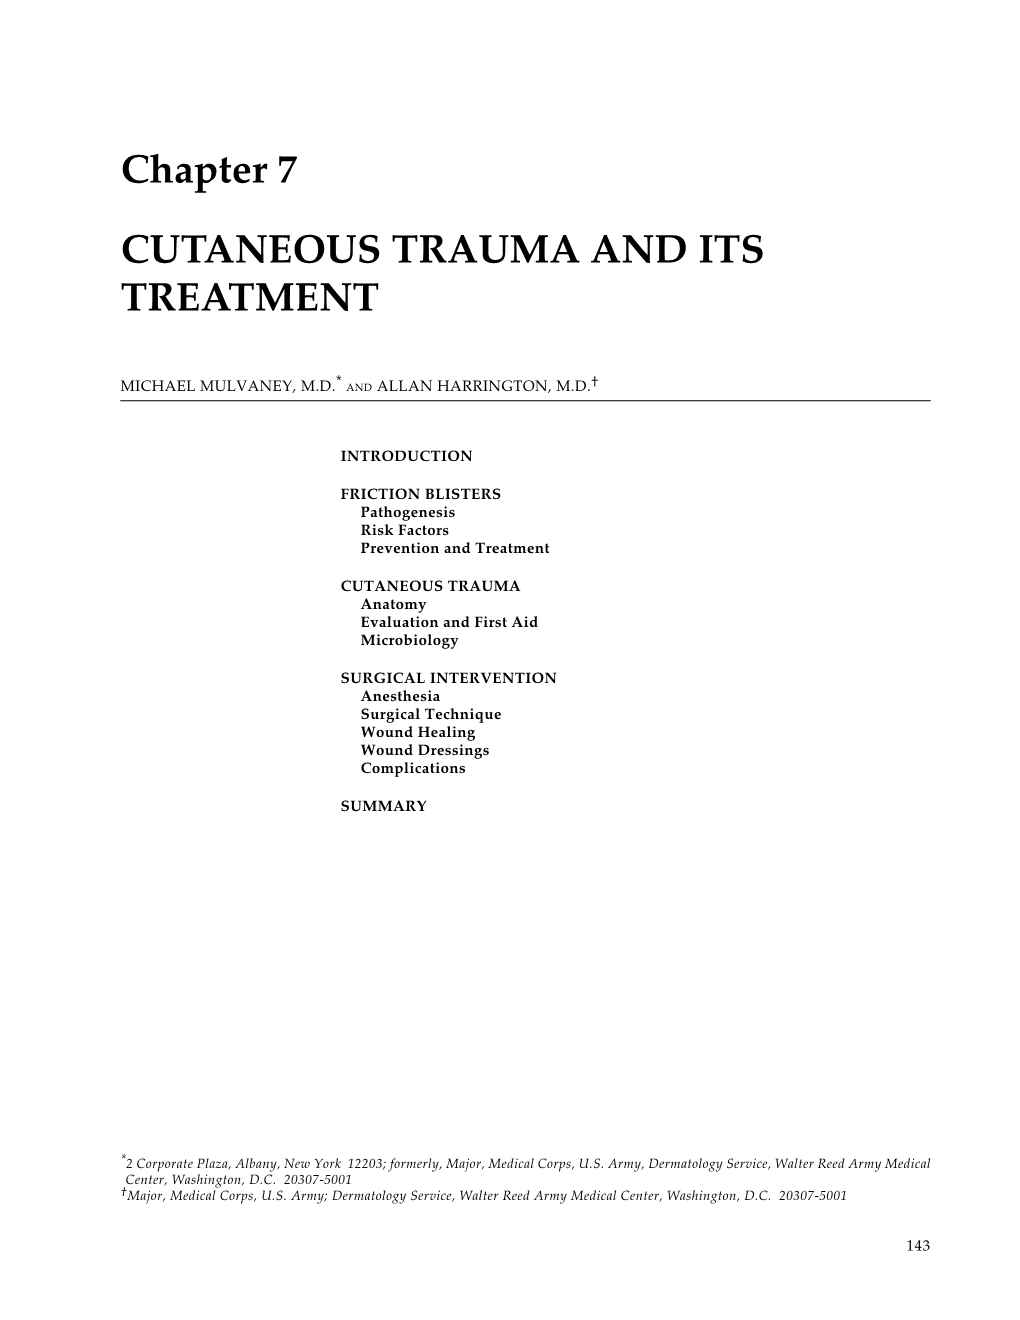 Military Dermatology, Chapter 7, Cutaneous Trauma and Its Treatment